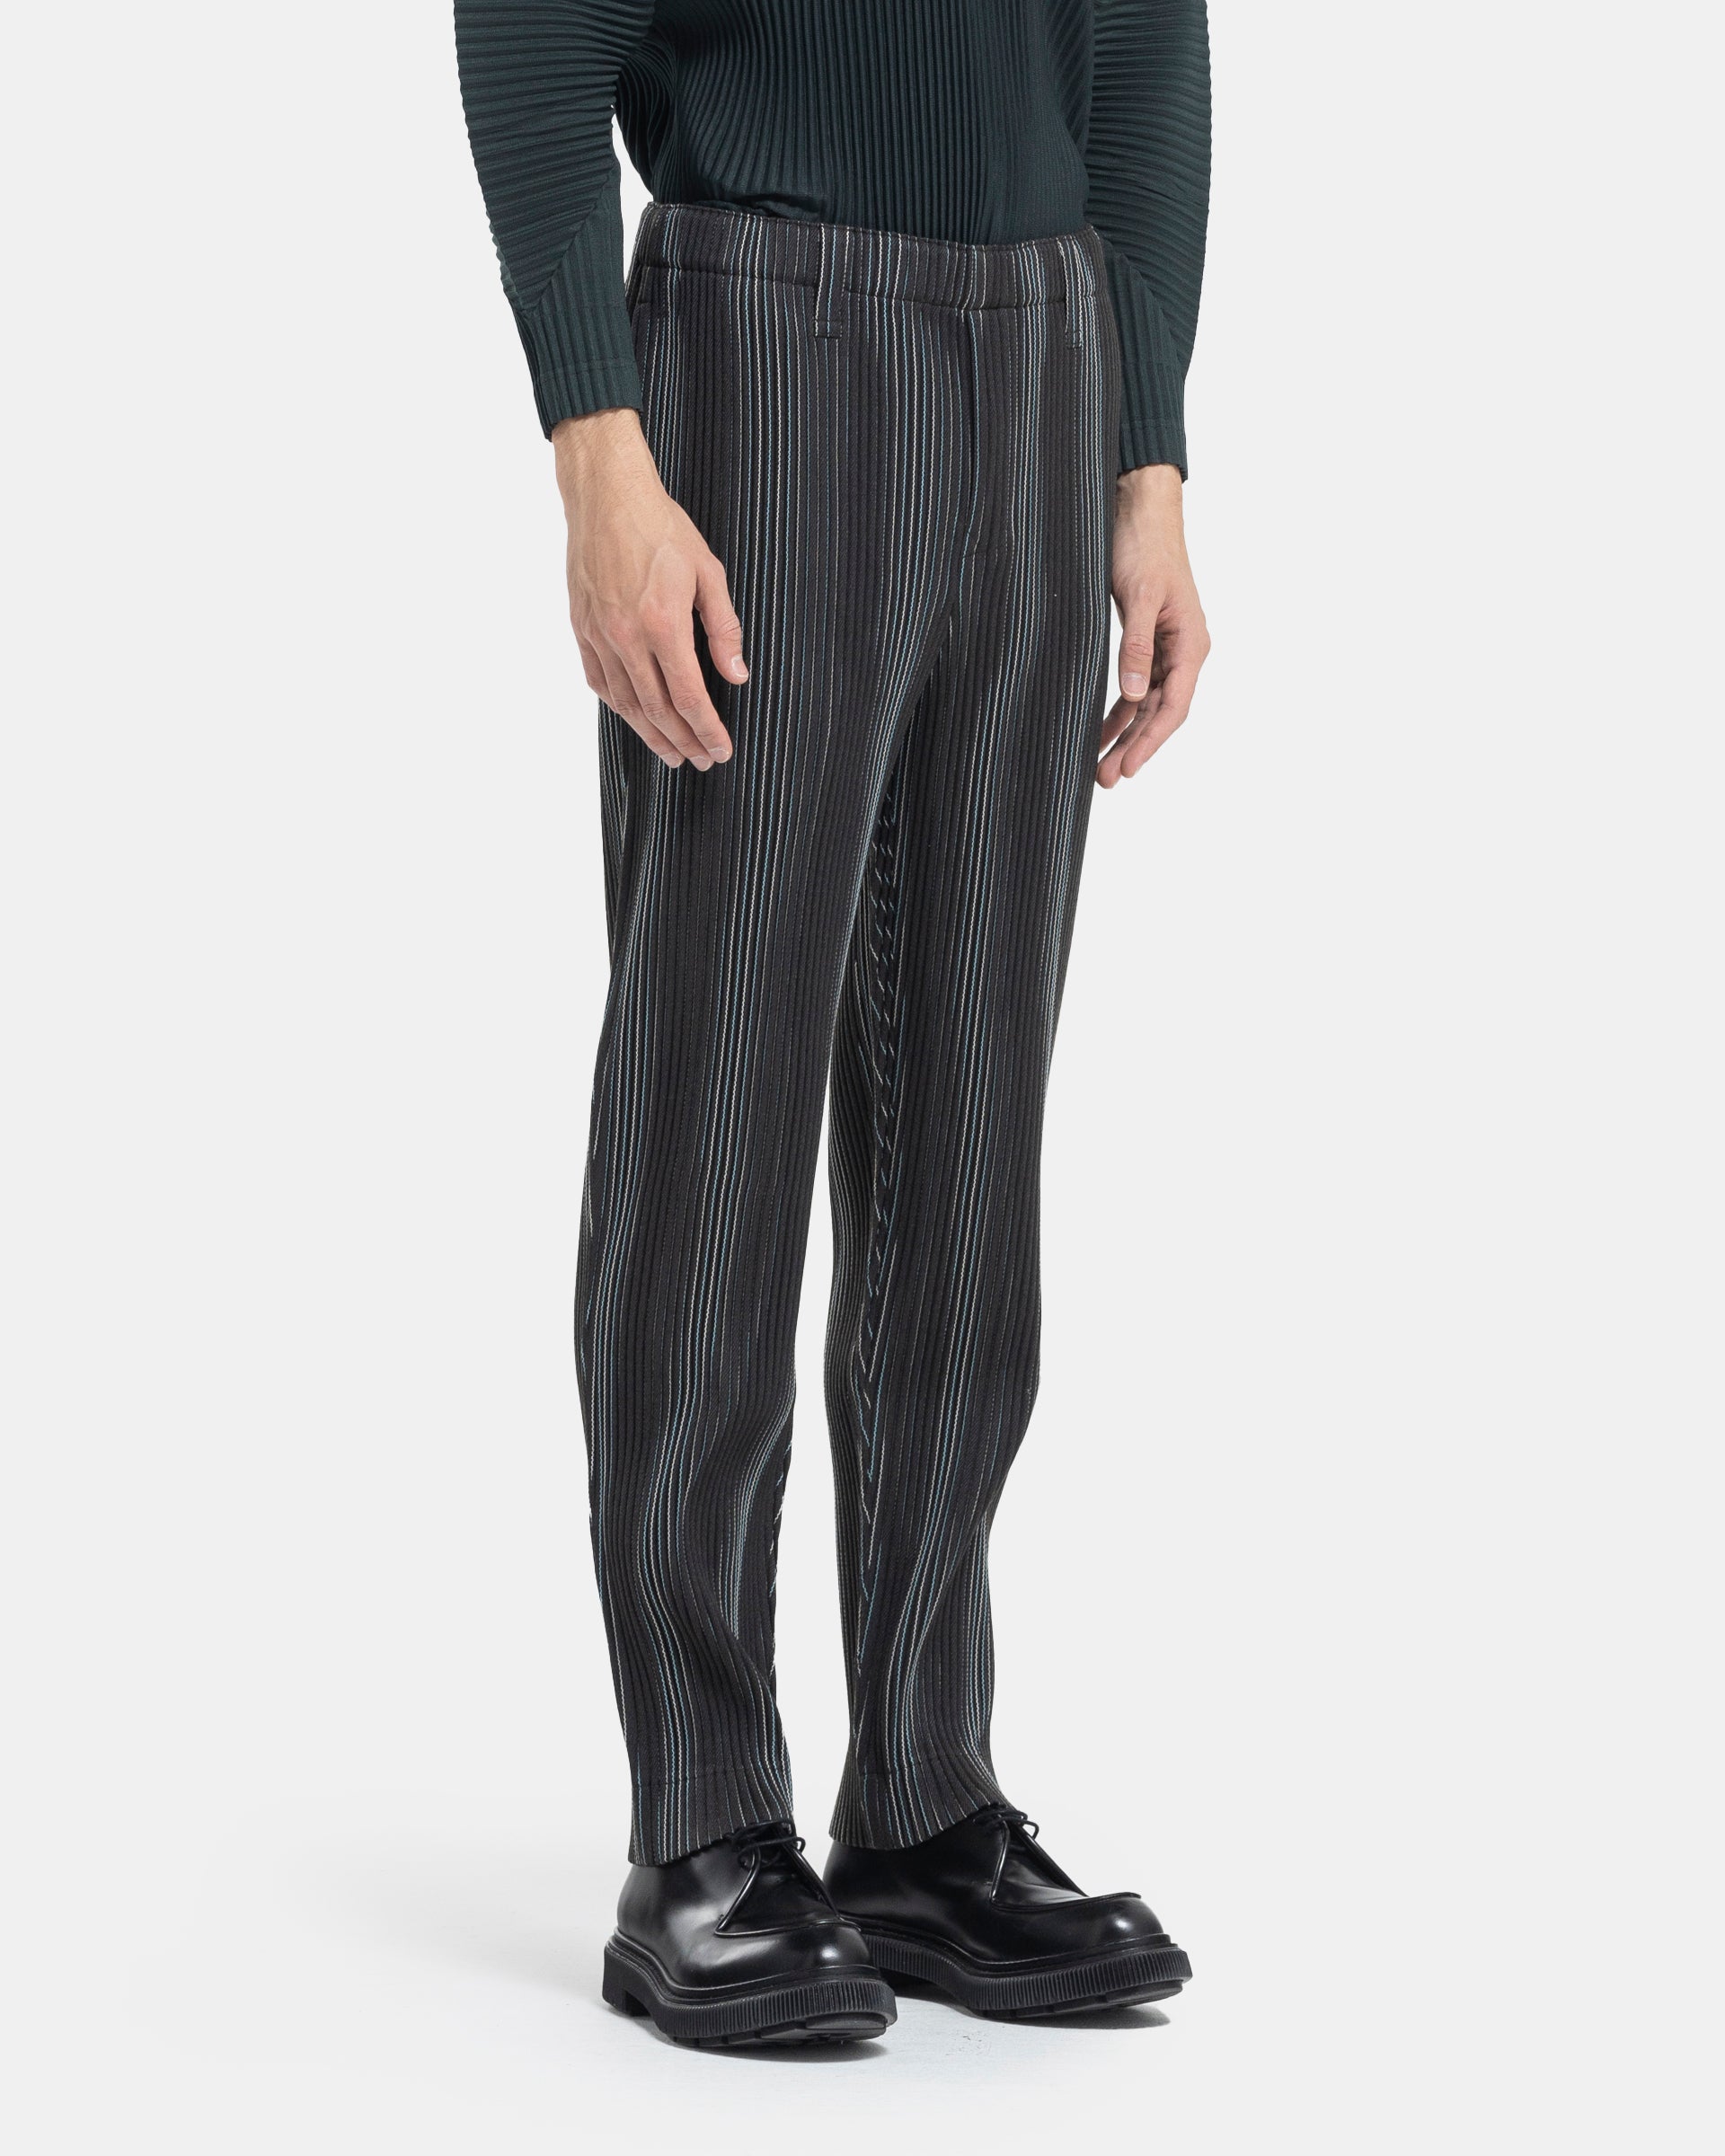 Shop Homme Plissé Issey Miyake Basics Pleated Knit Pants | Saks Fifth Avenue